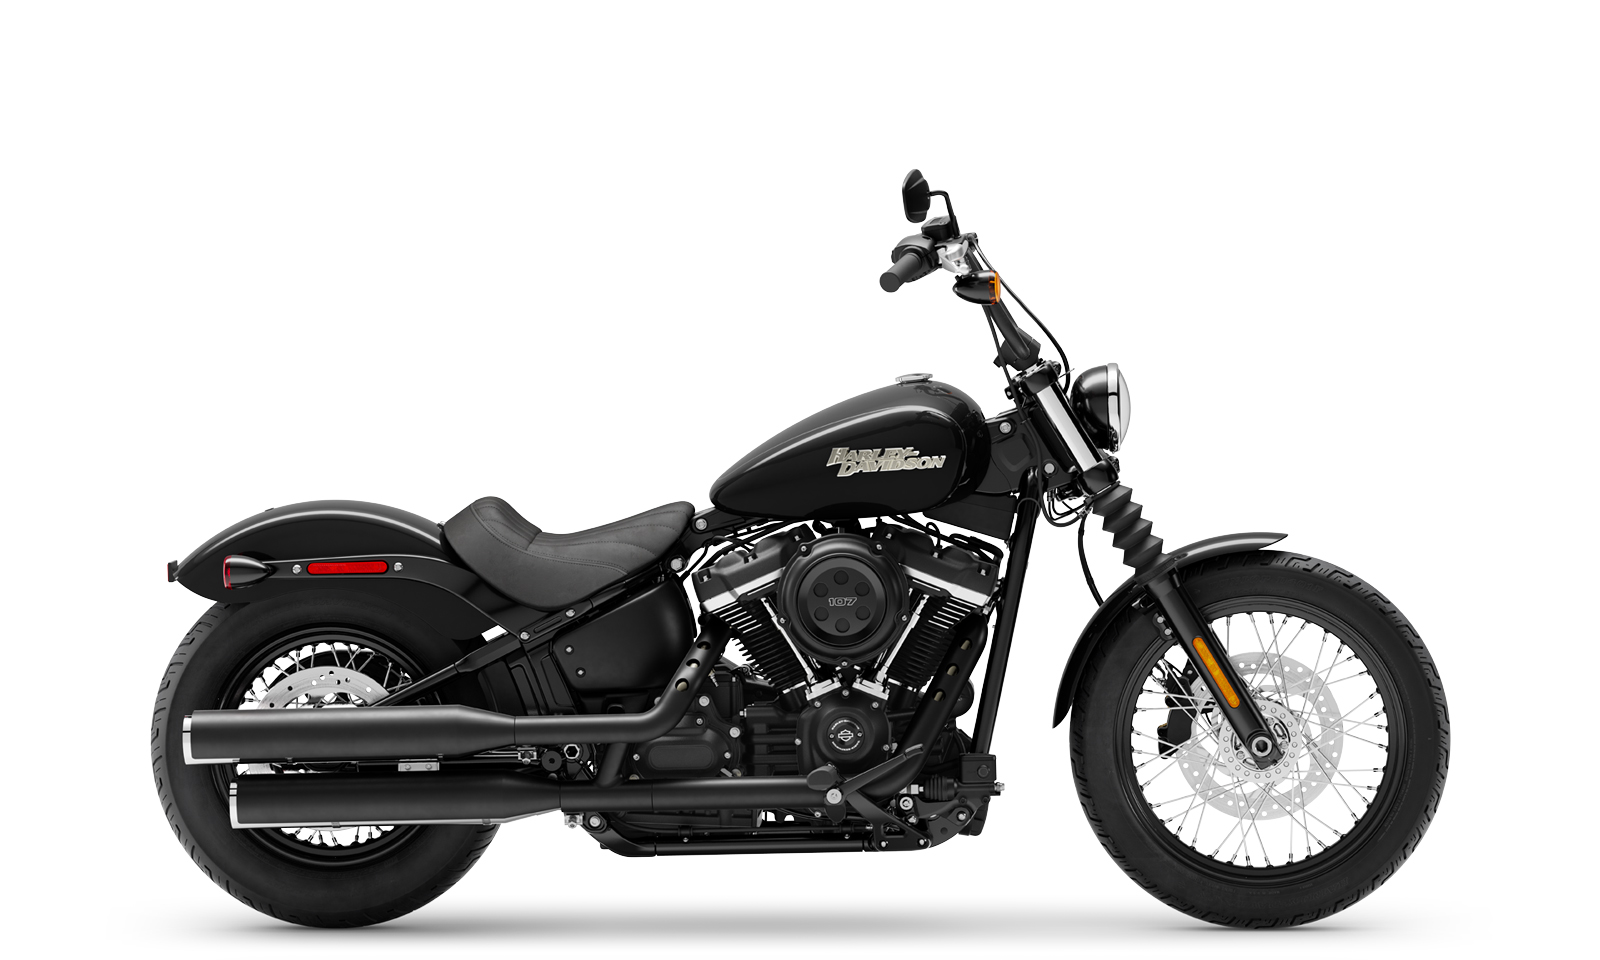 2020 Street Bob Motorcycle Harley Davidson United States